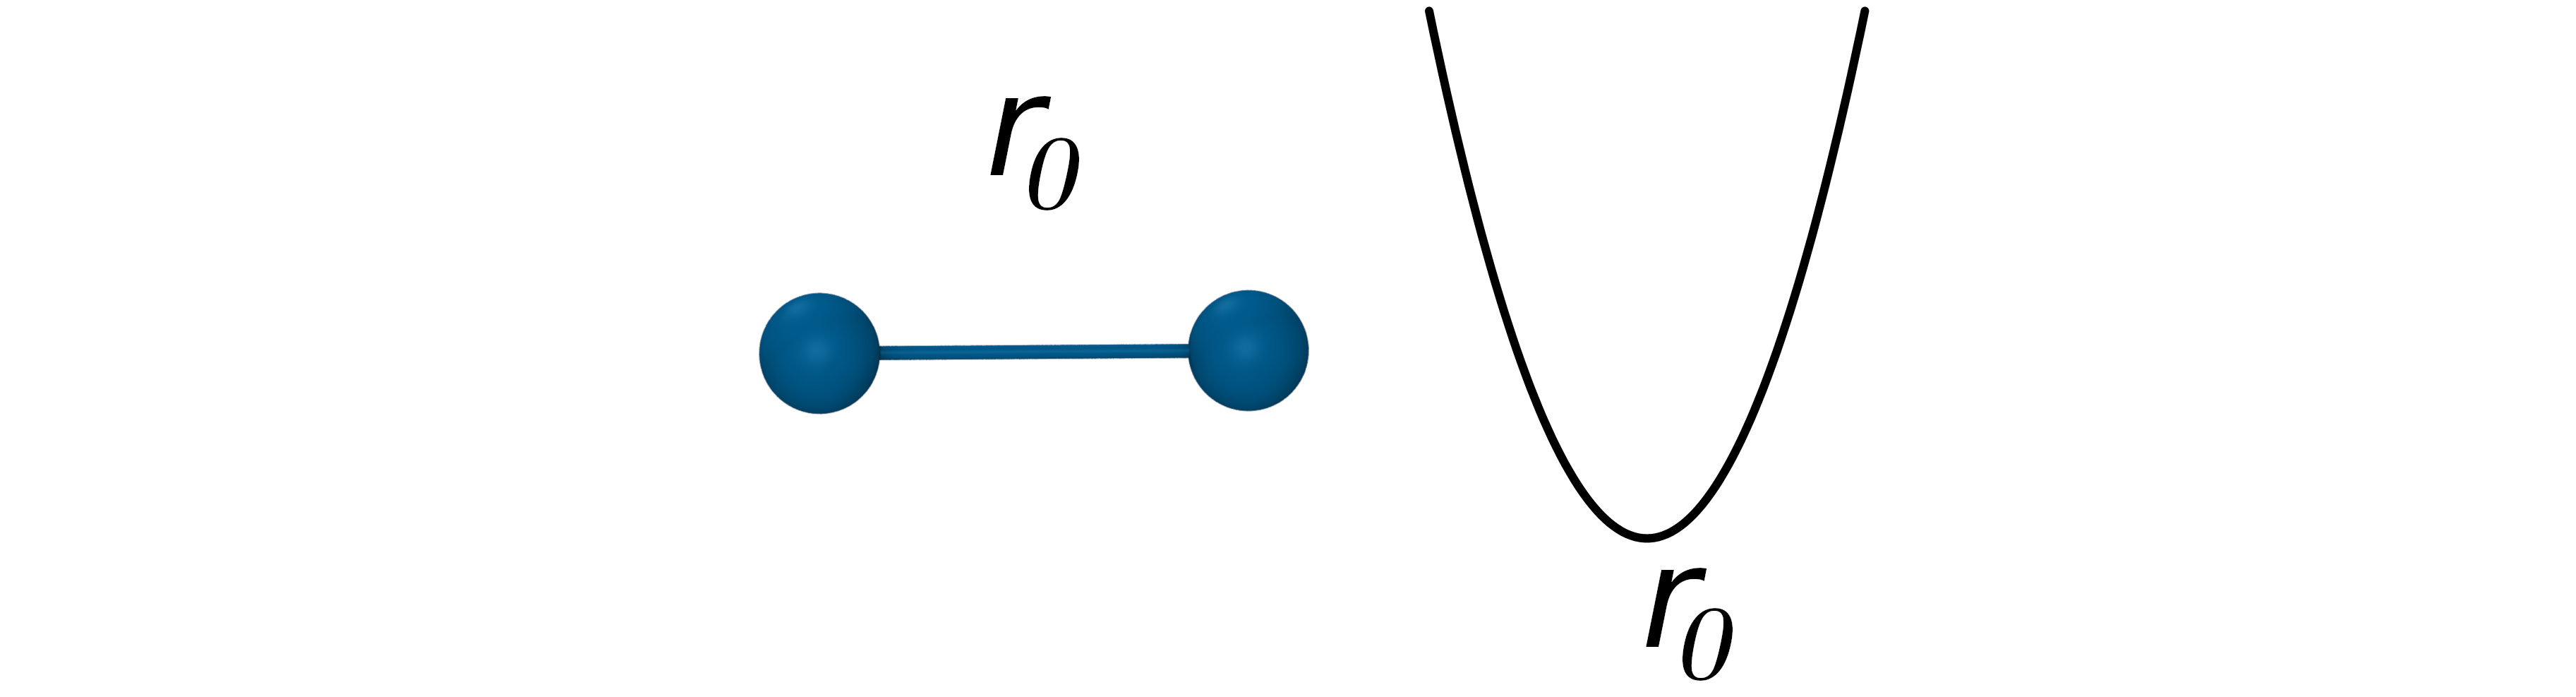 graph: harmonic bond potential